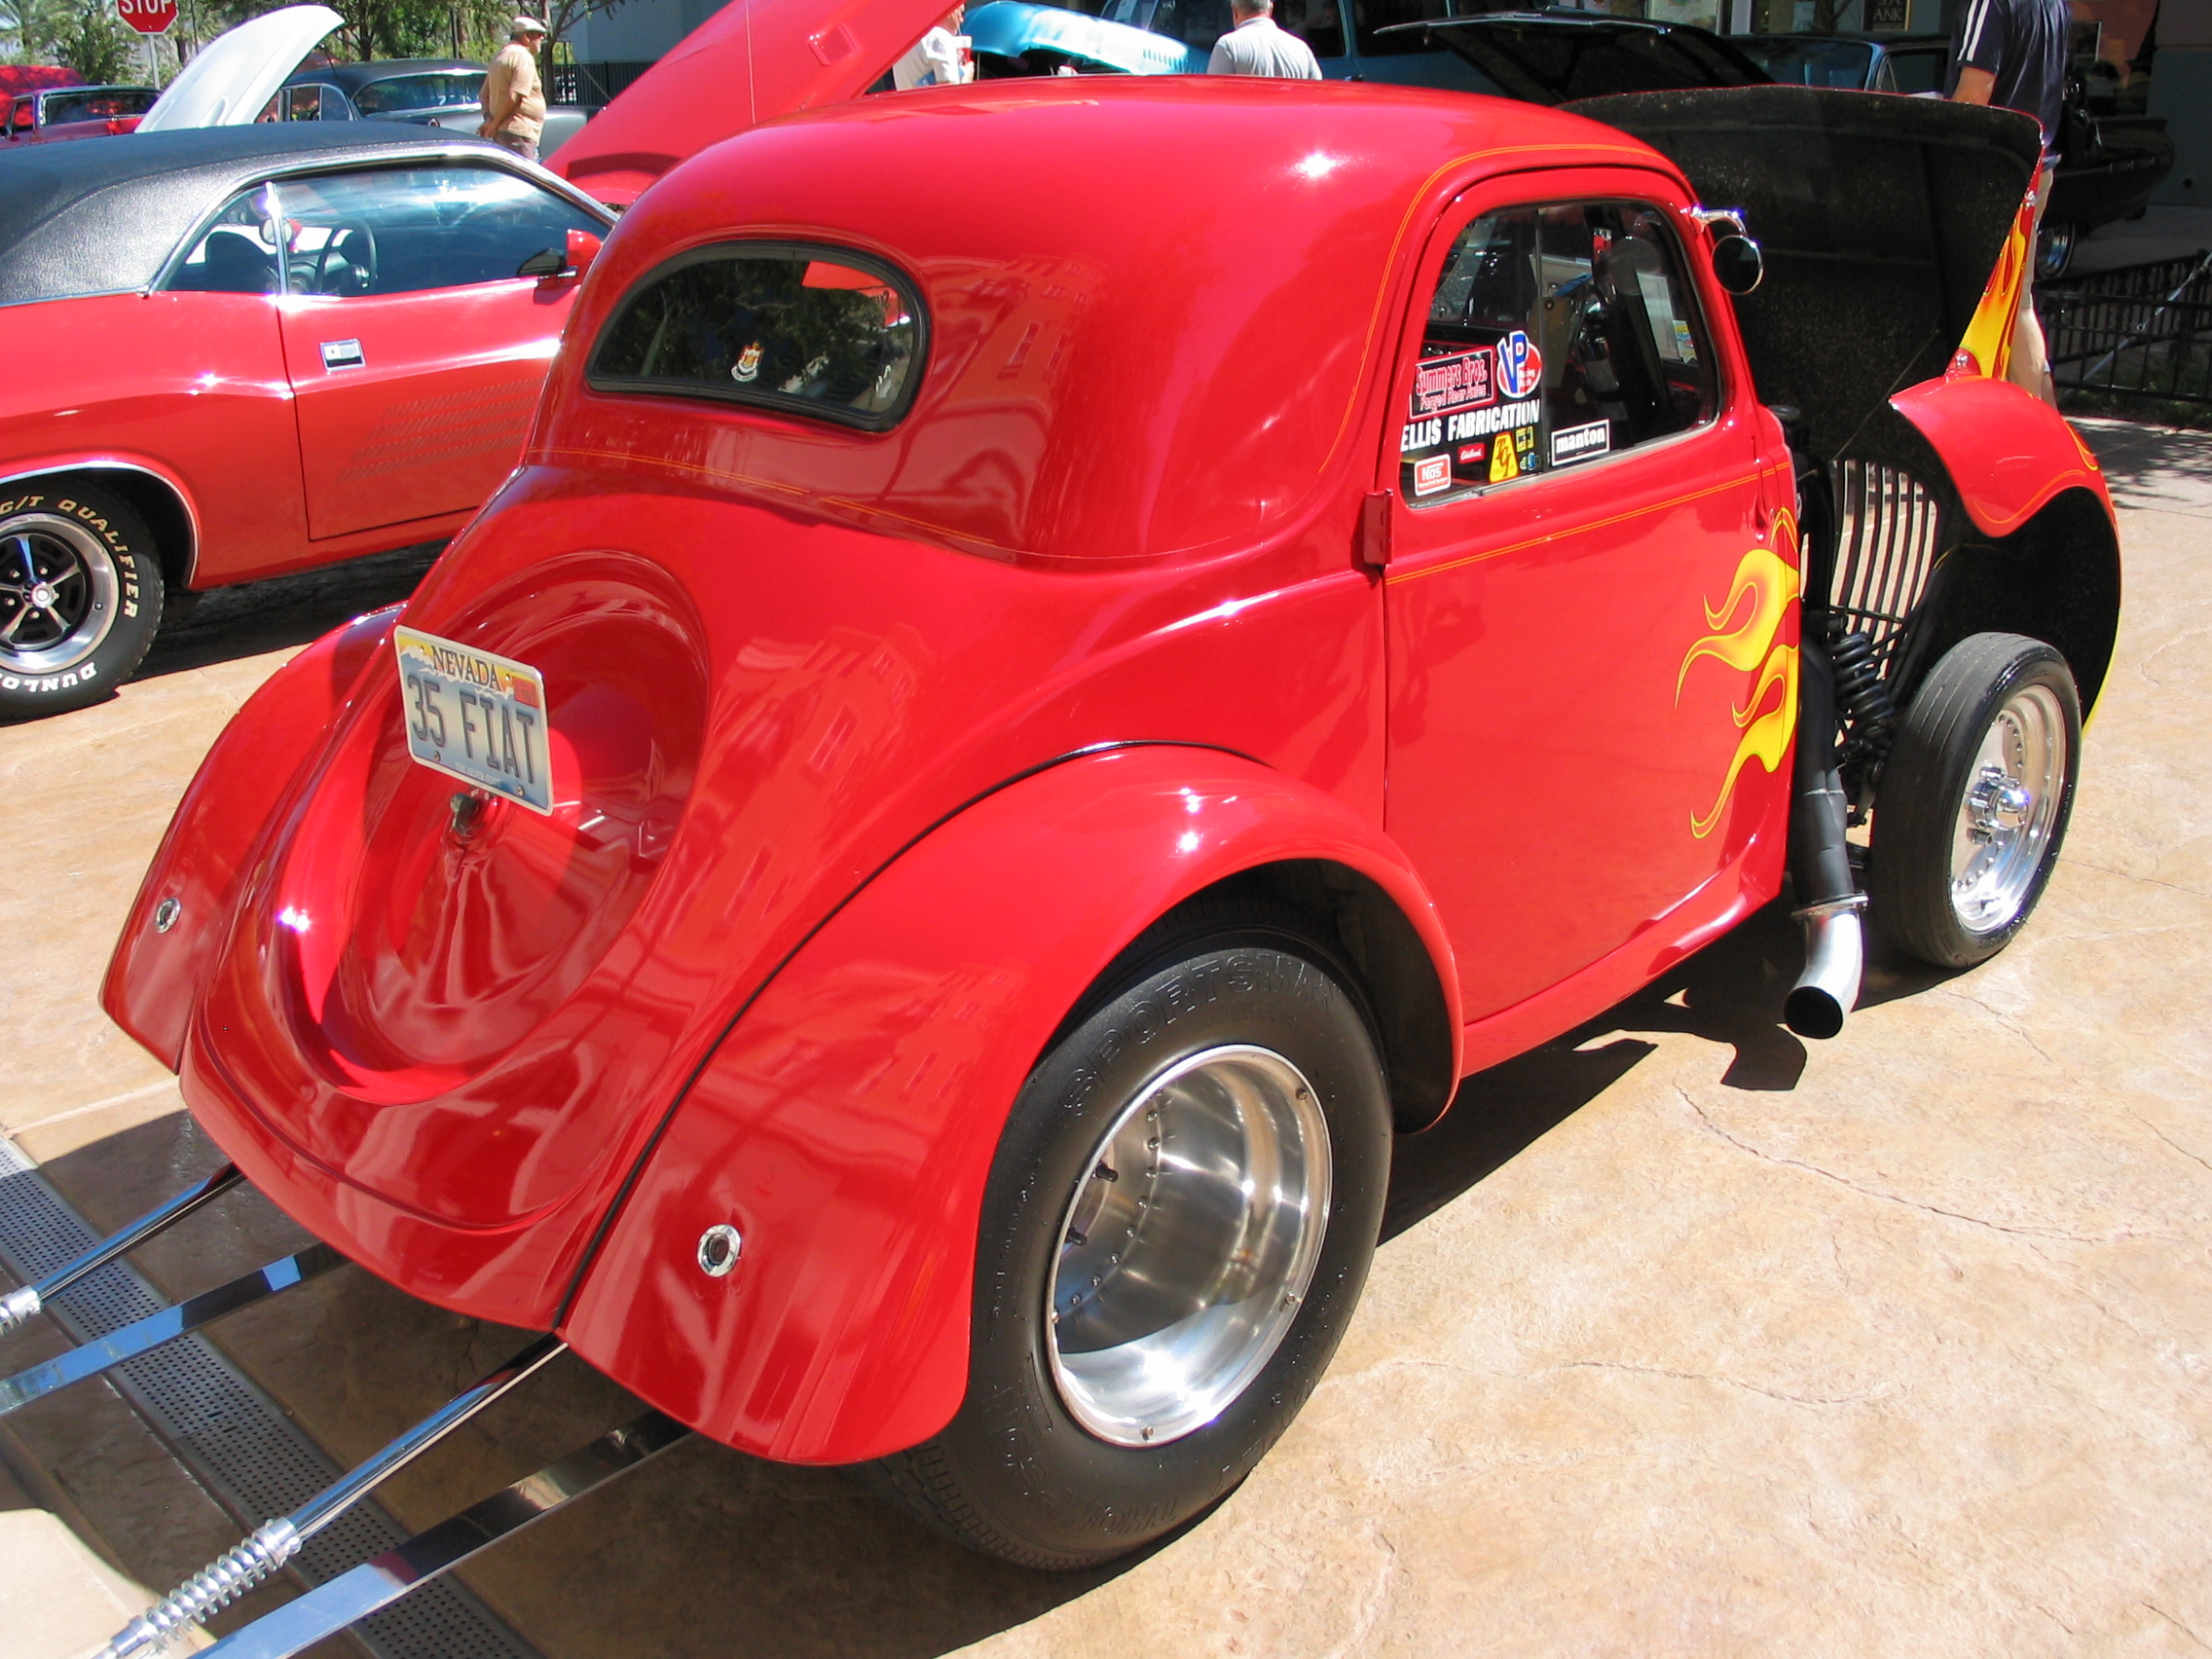 Fiat Topolino hotrod rear